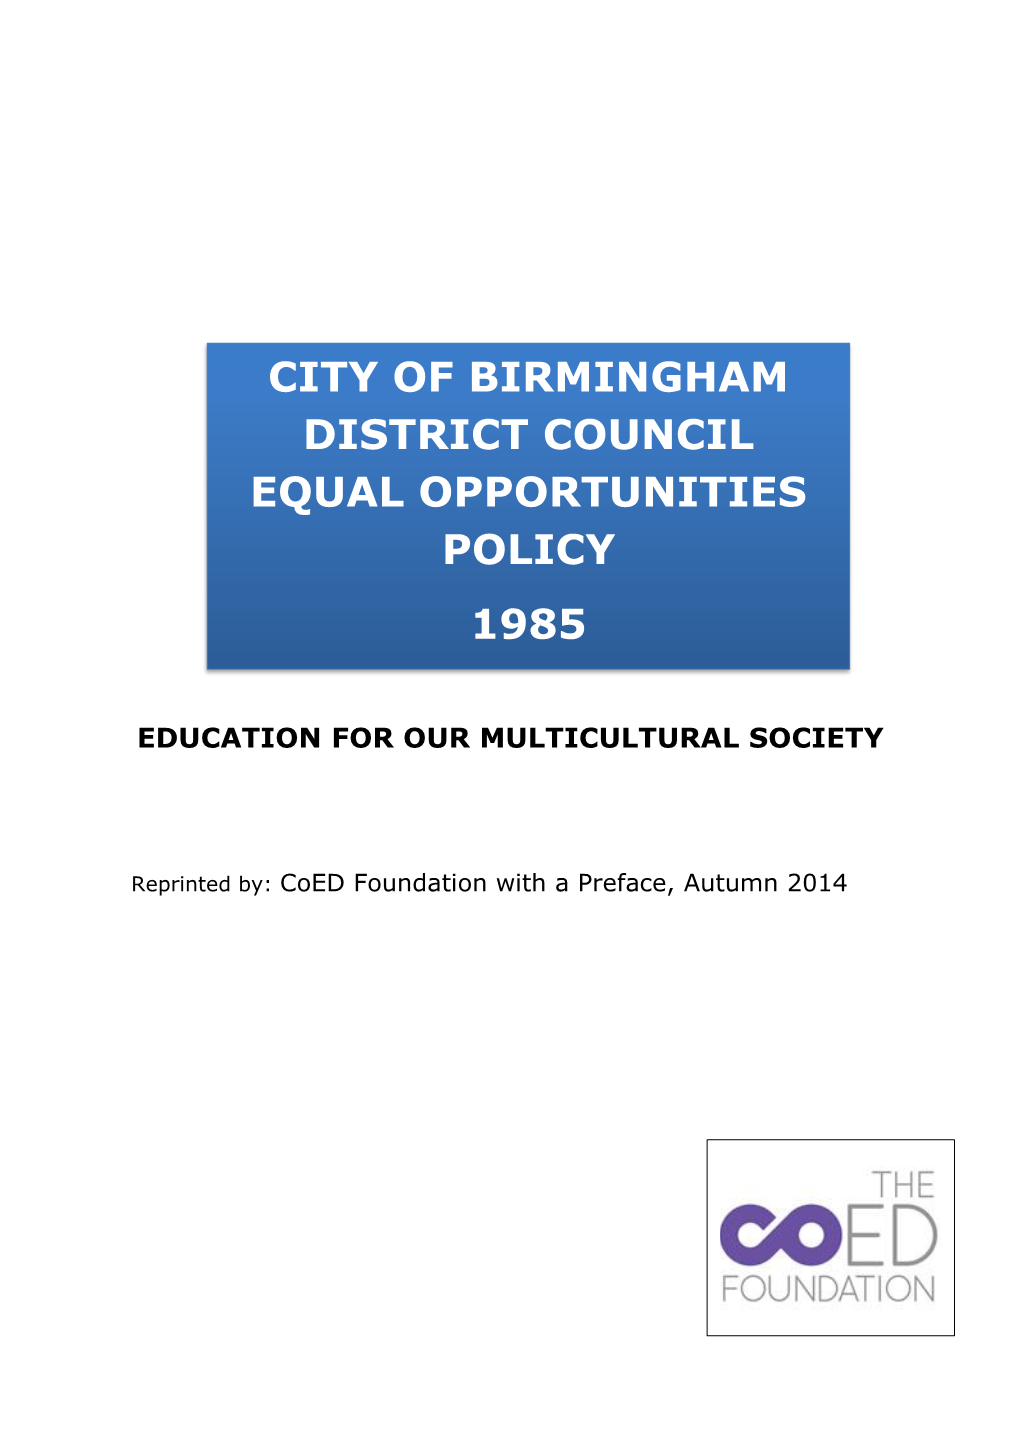 City of Birmingham District Council Equal